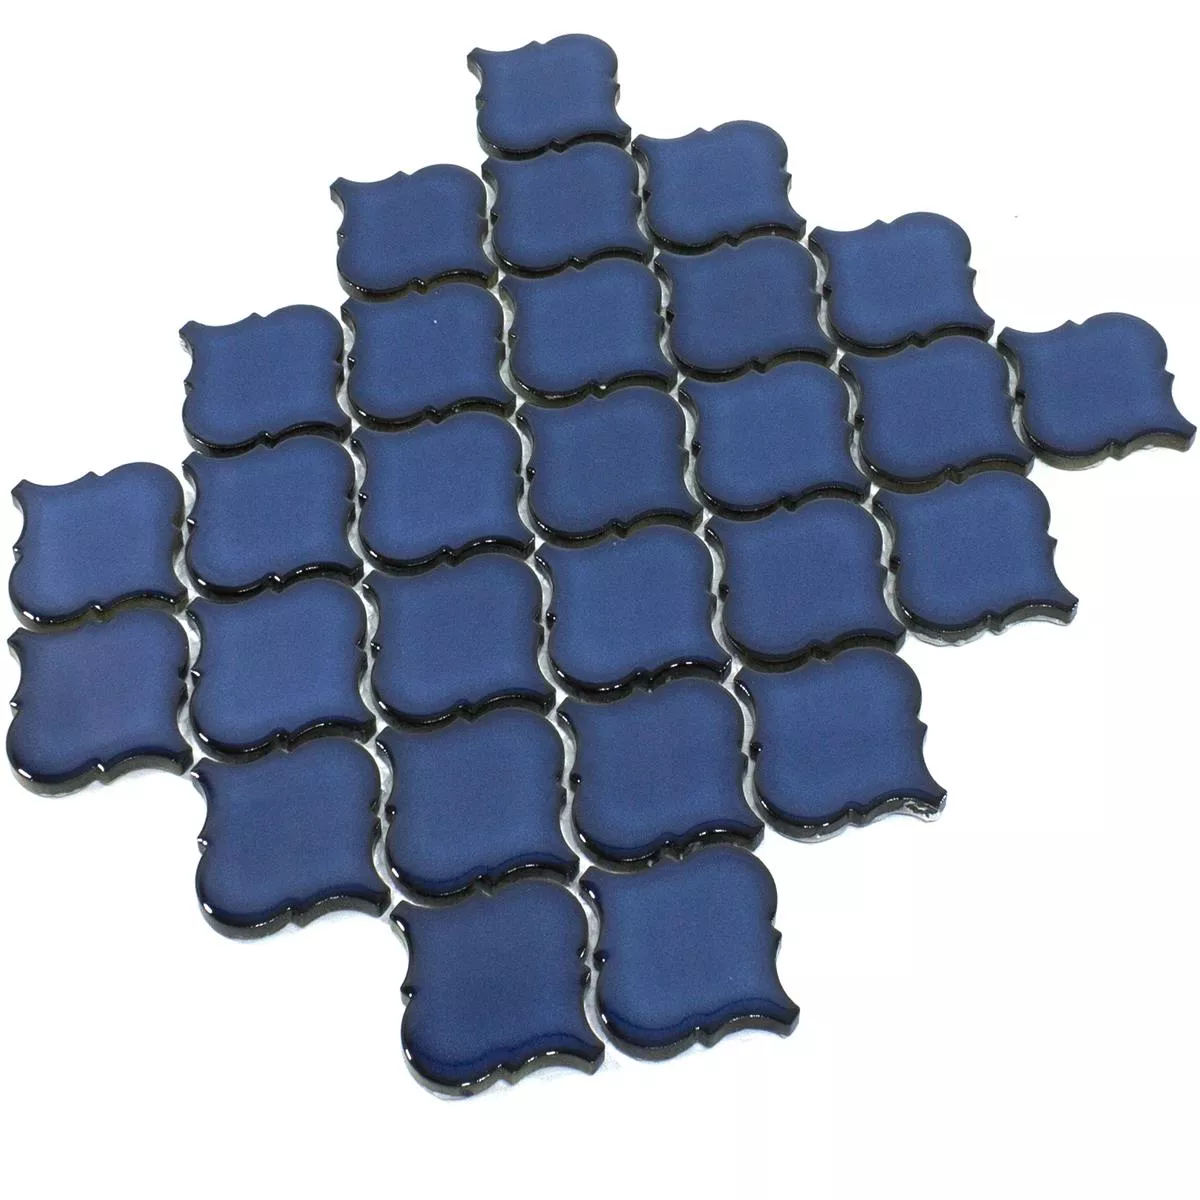 Muster von Keramik Mosaik Fliesen Asmara Arabesque Blau